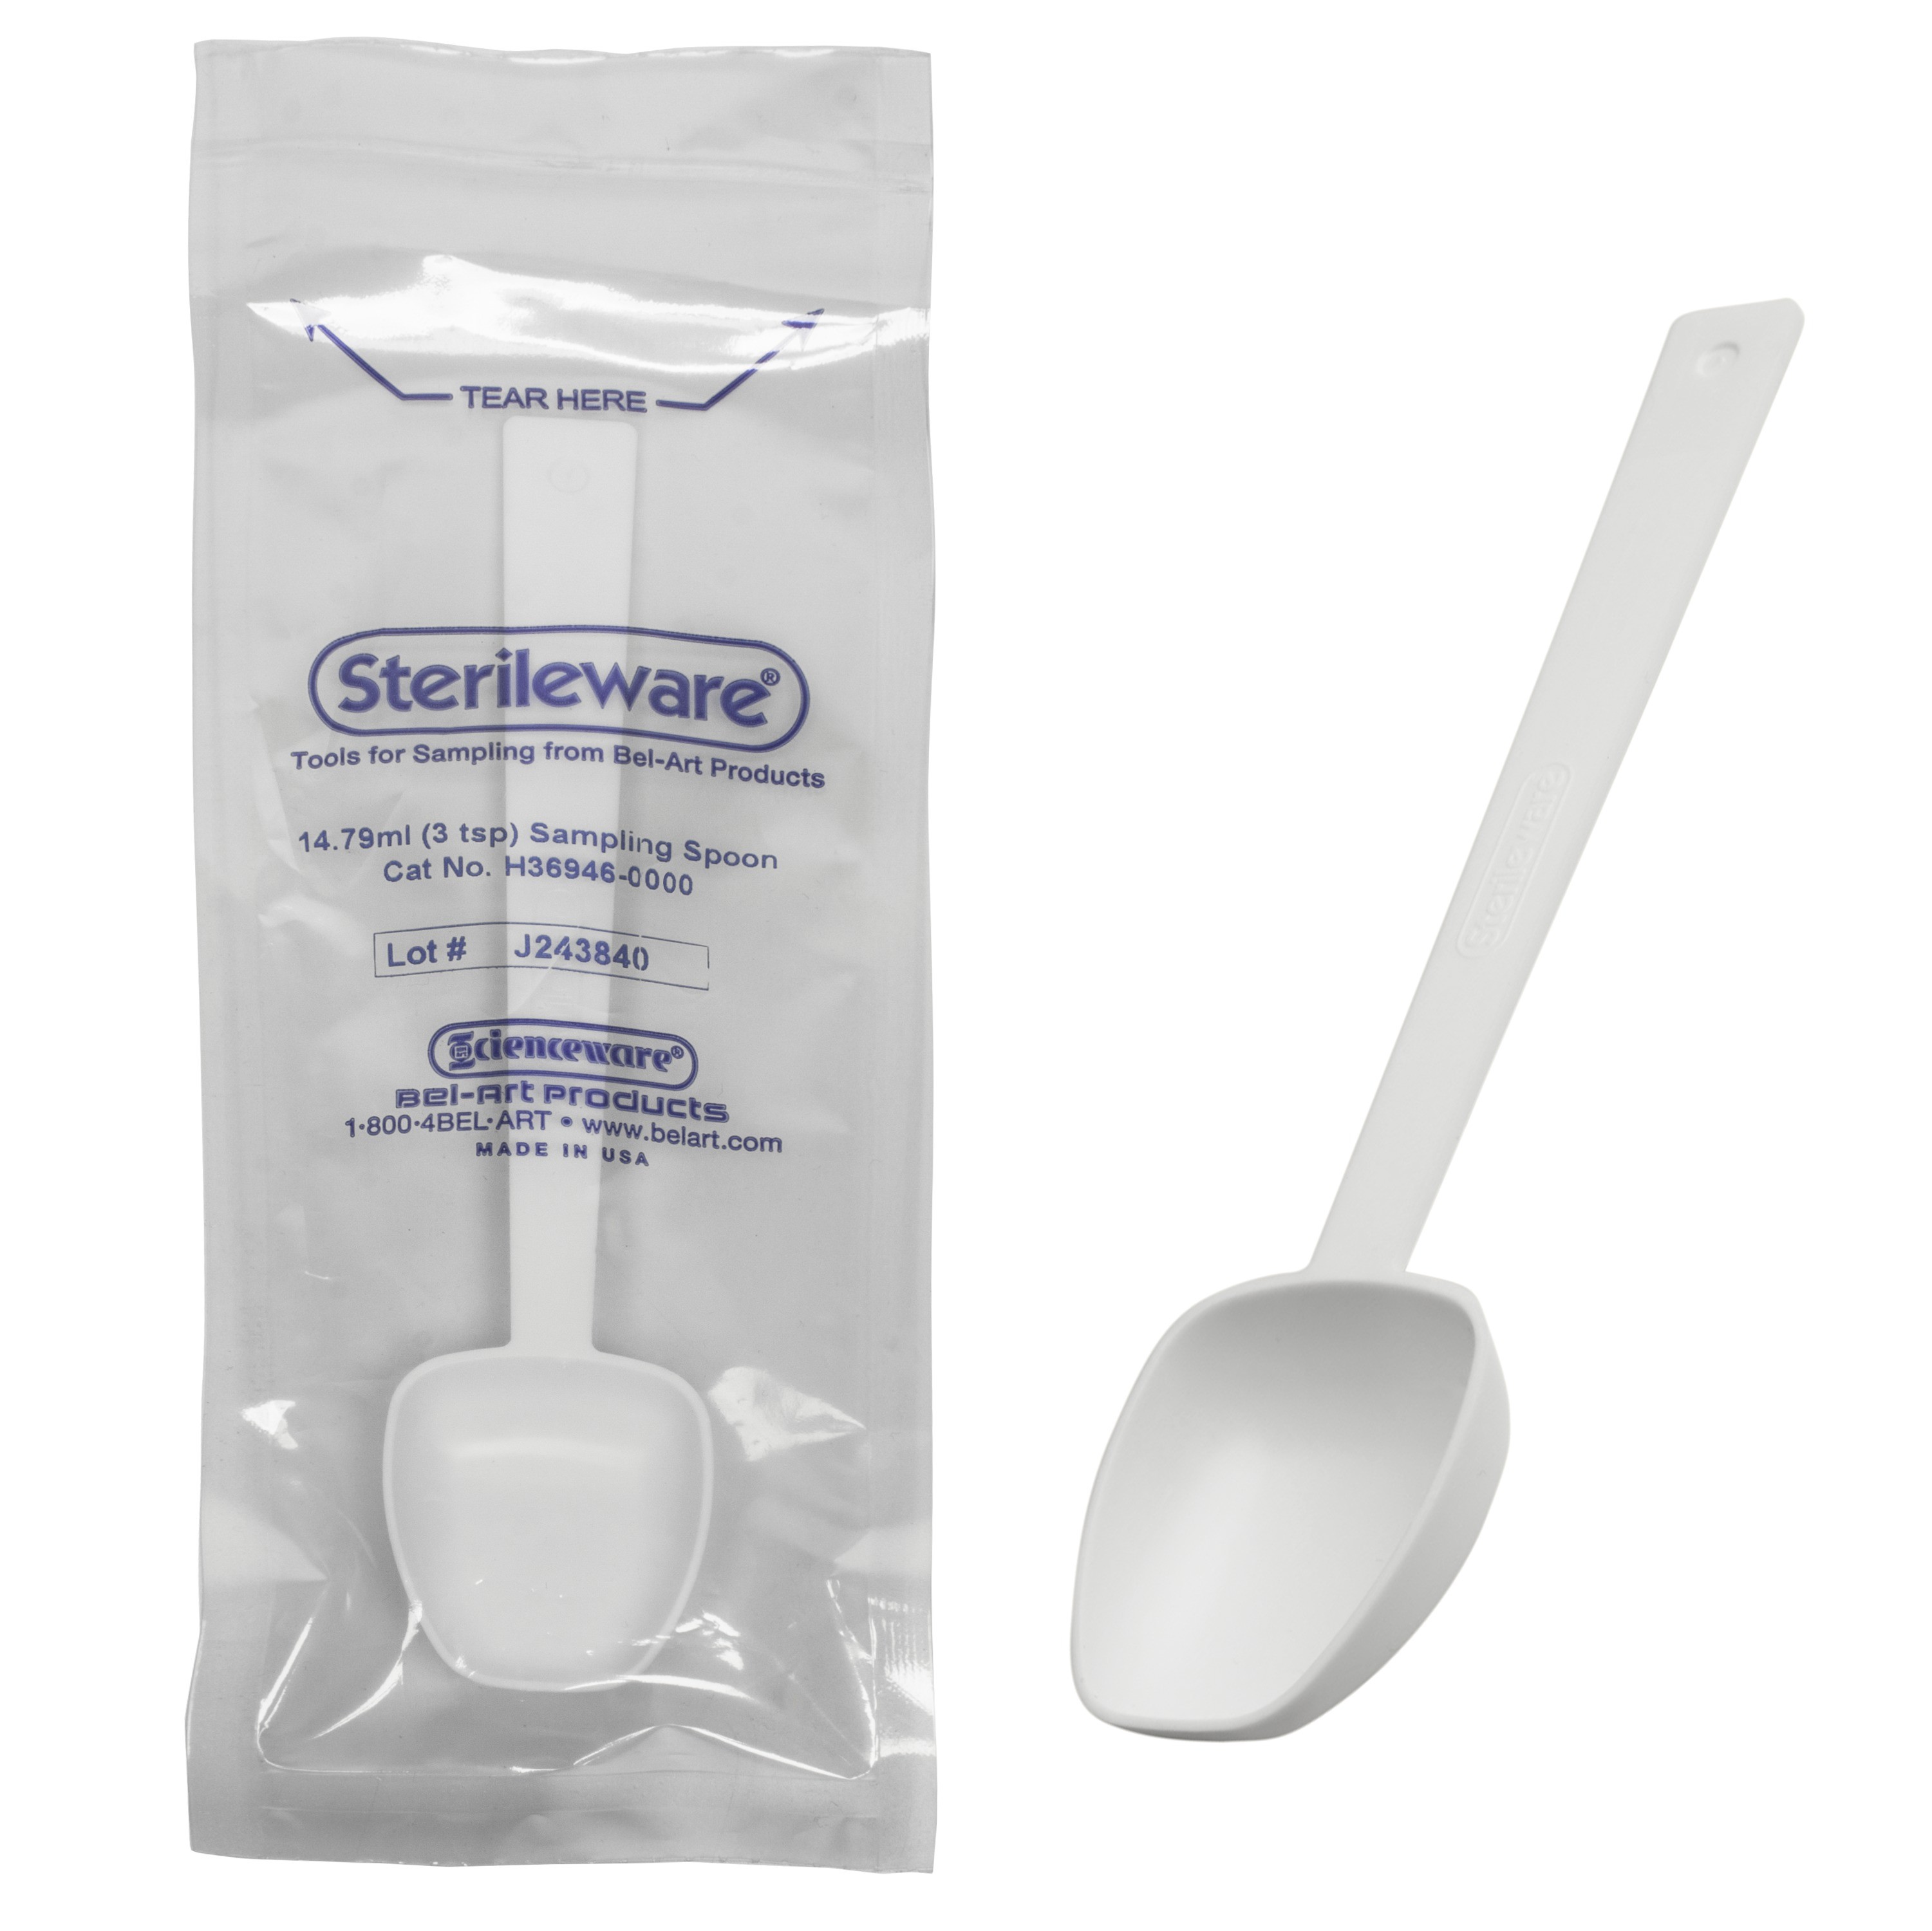 SP Bel-Art Sterileware Long Handle Sterile Sampling Spoon; 14.79ml (3 tsp), Plastic, Individually Wrapped (Pack of 200)